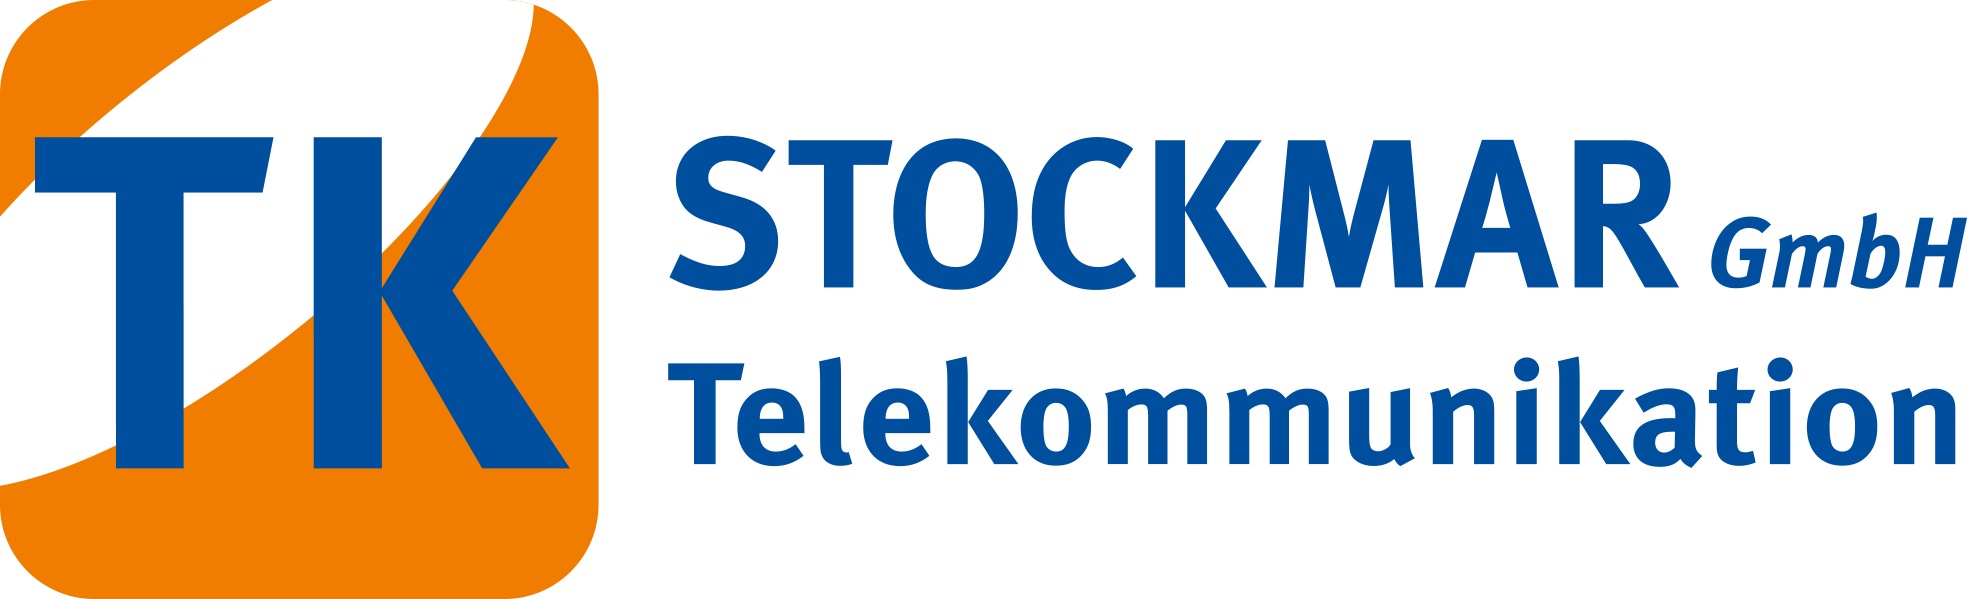 Bild-Textmarke TK Stockmar GmbH